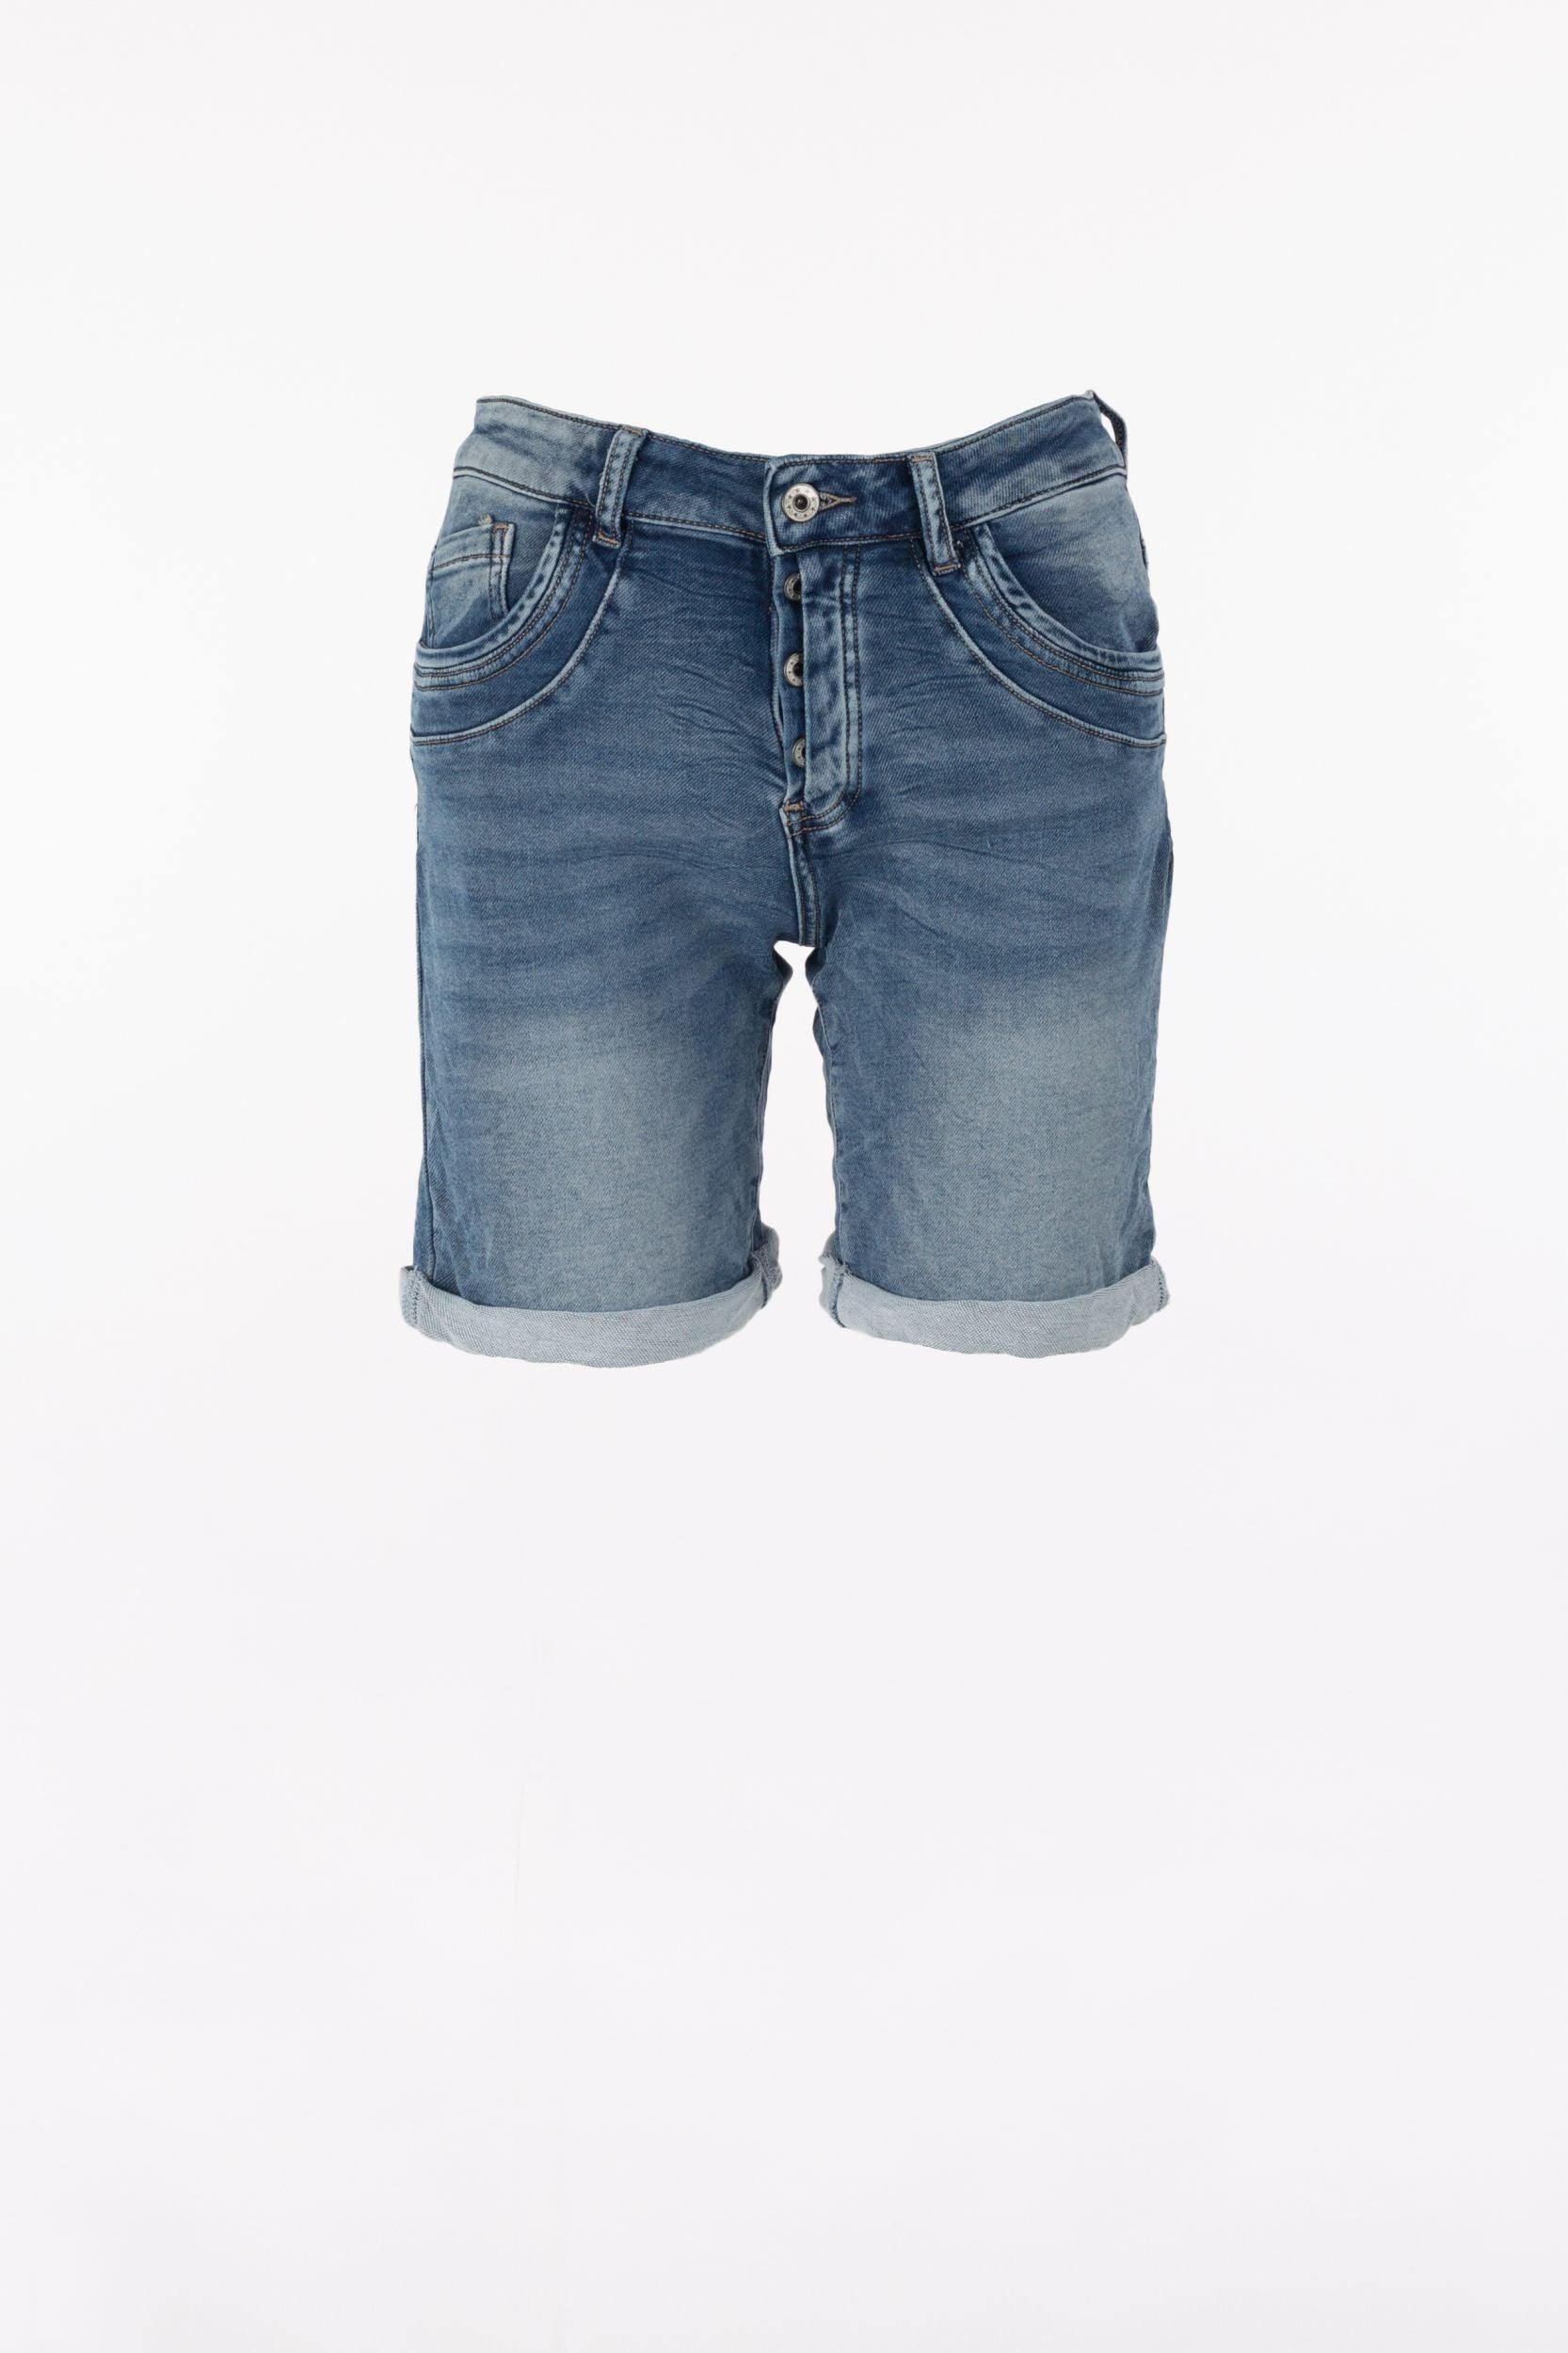 Jeans Shorts - La Strada